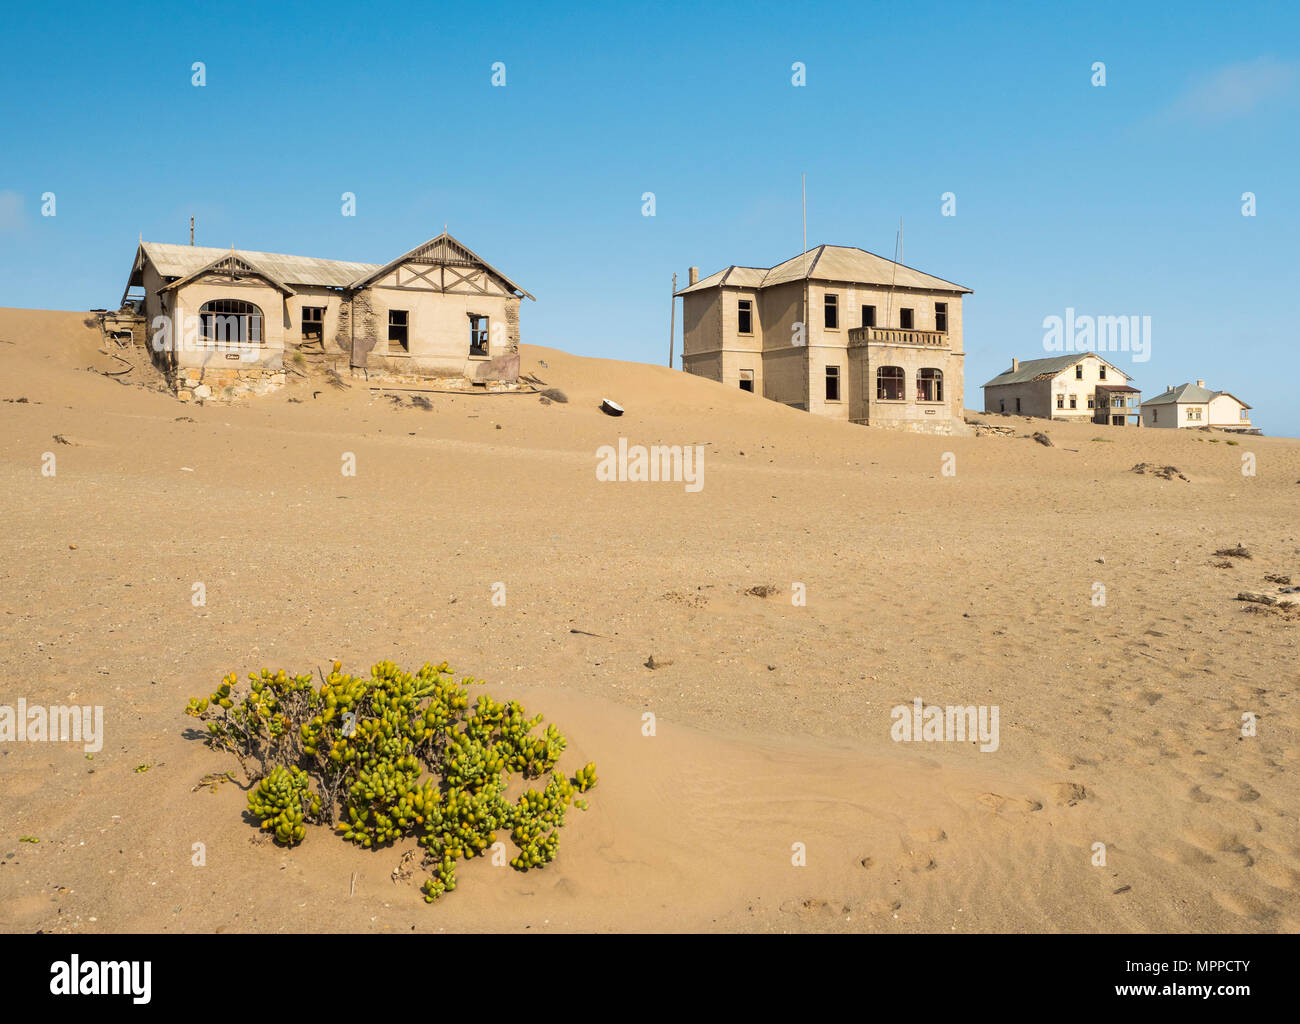 Africa, Namibia, houses of ghost town Kolmanskop at Namib desert Stock Photo